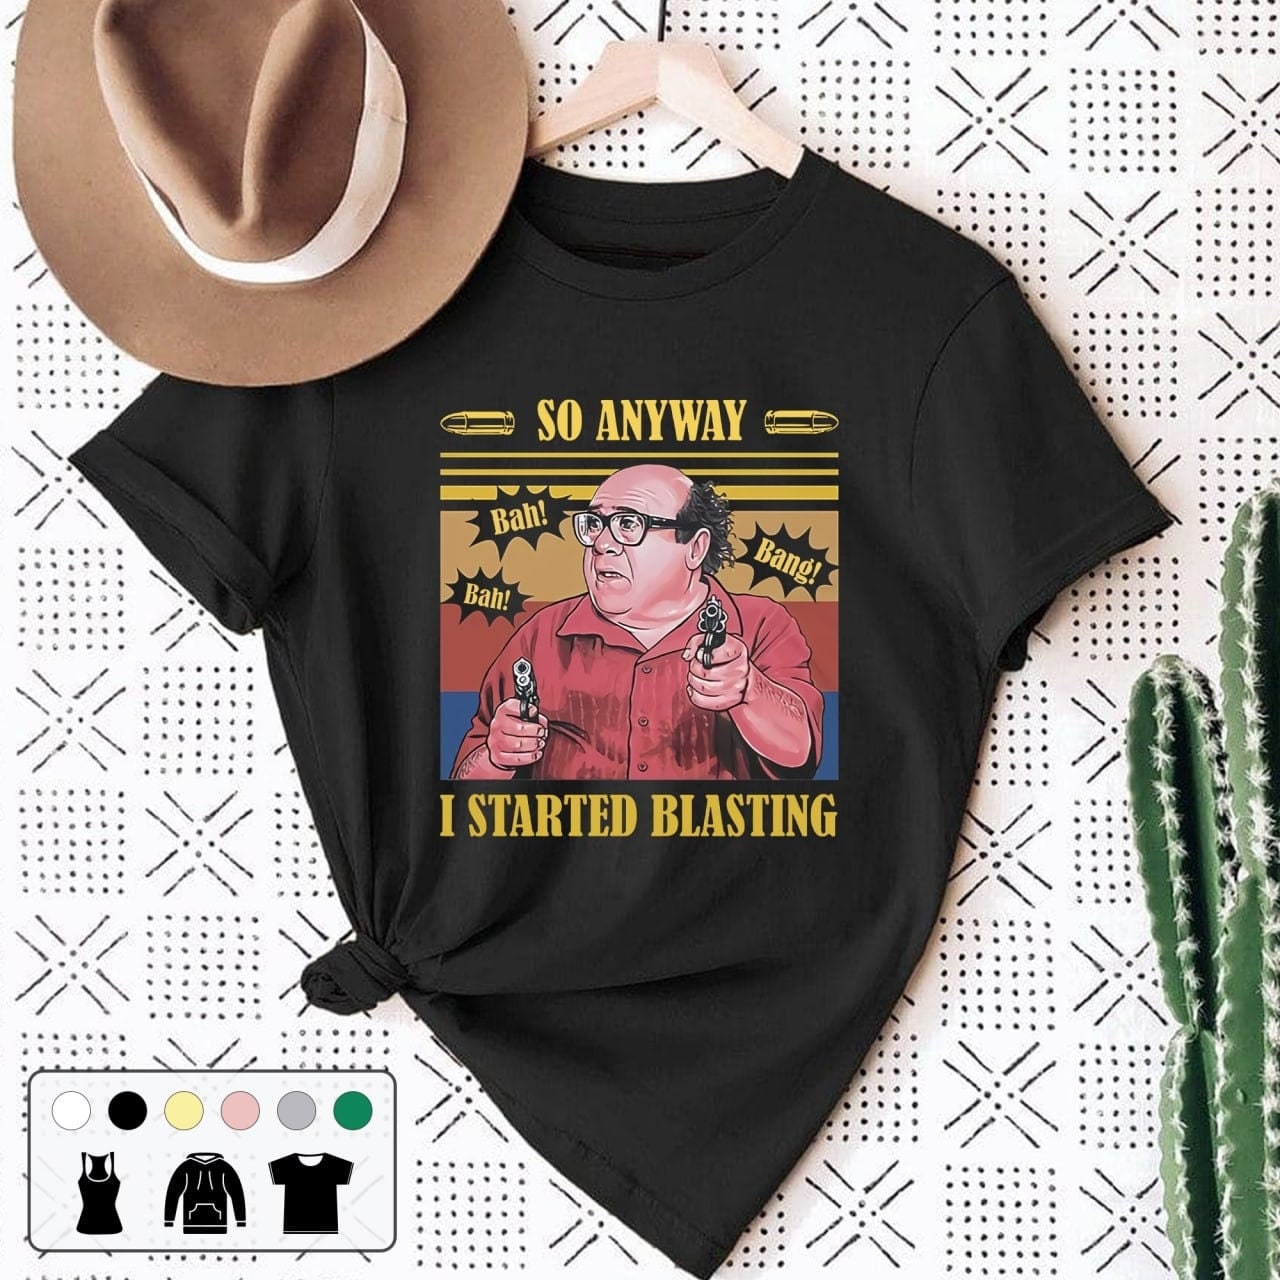 It’s Always Sunny In Philadelphia Funny Movie Graphic Unisex T-Shirt